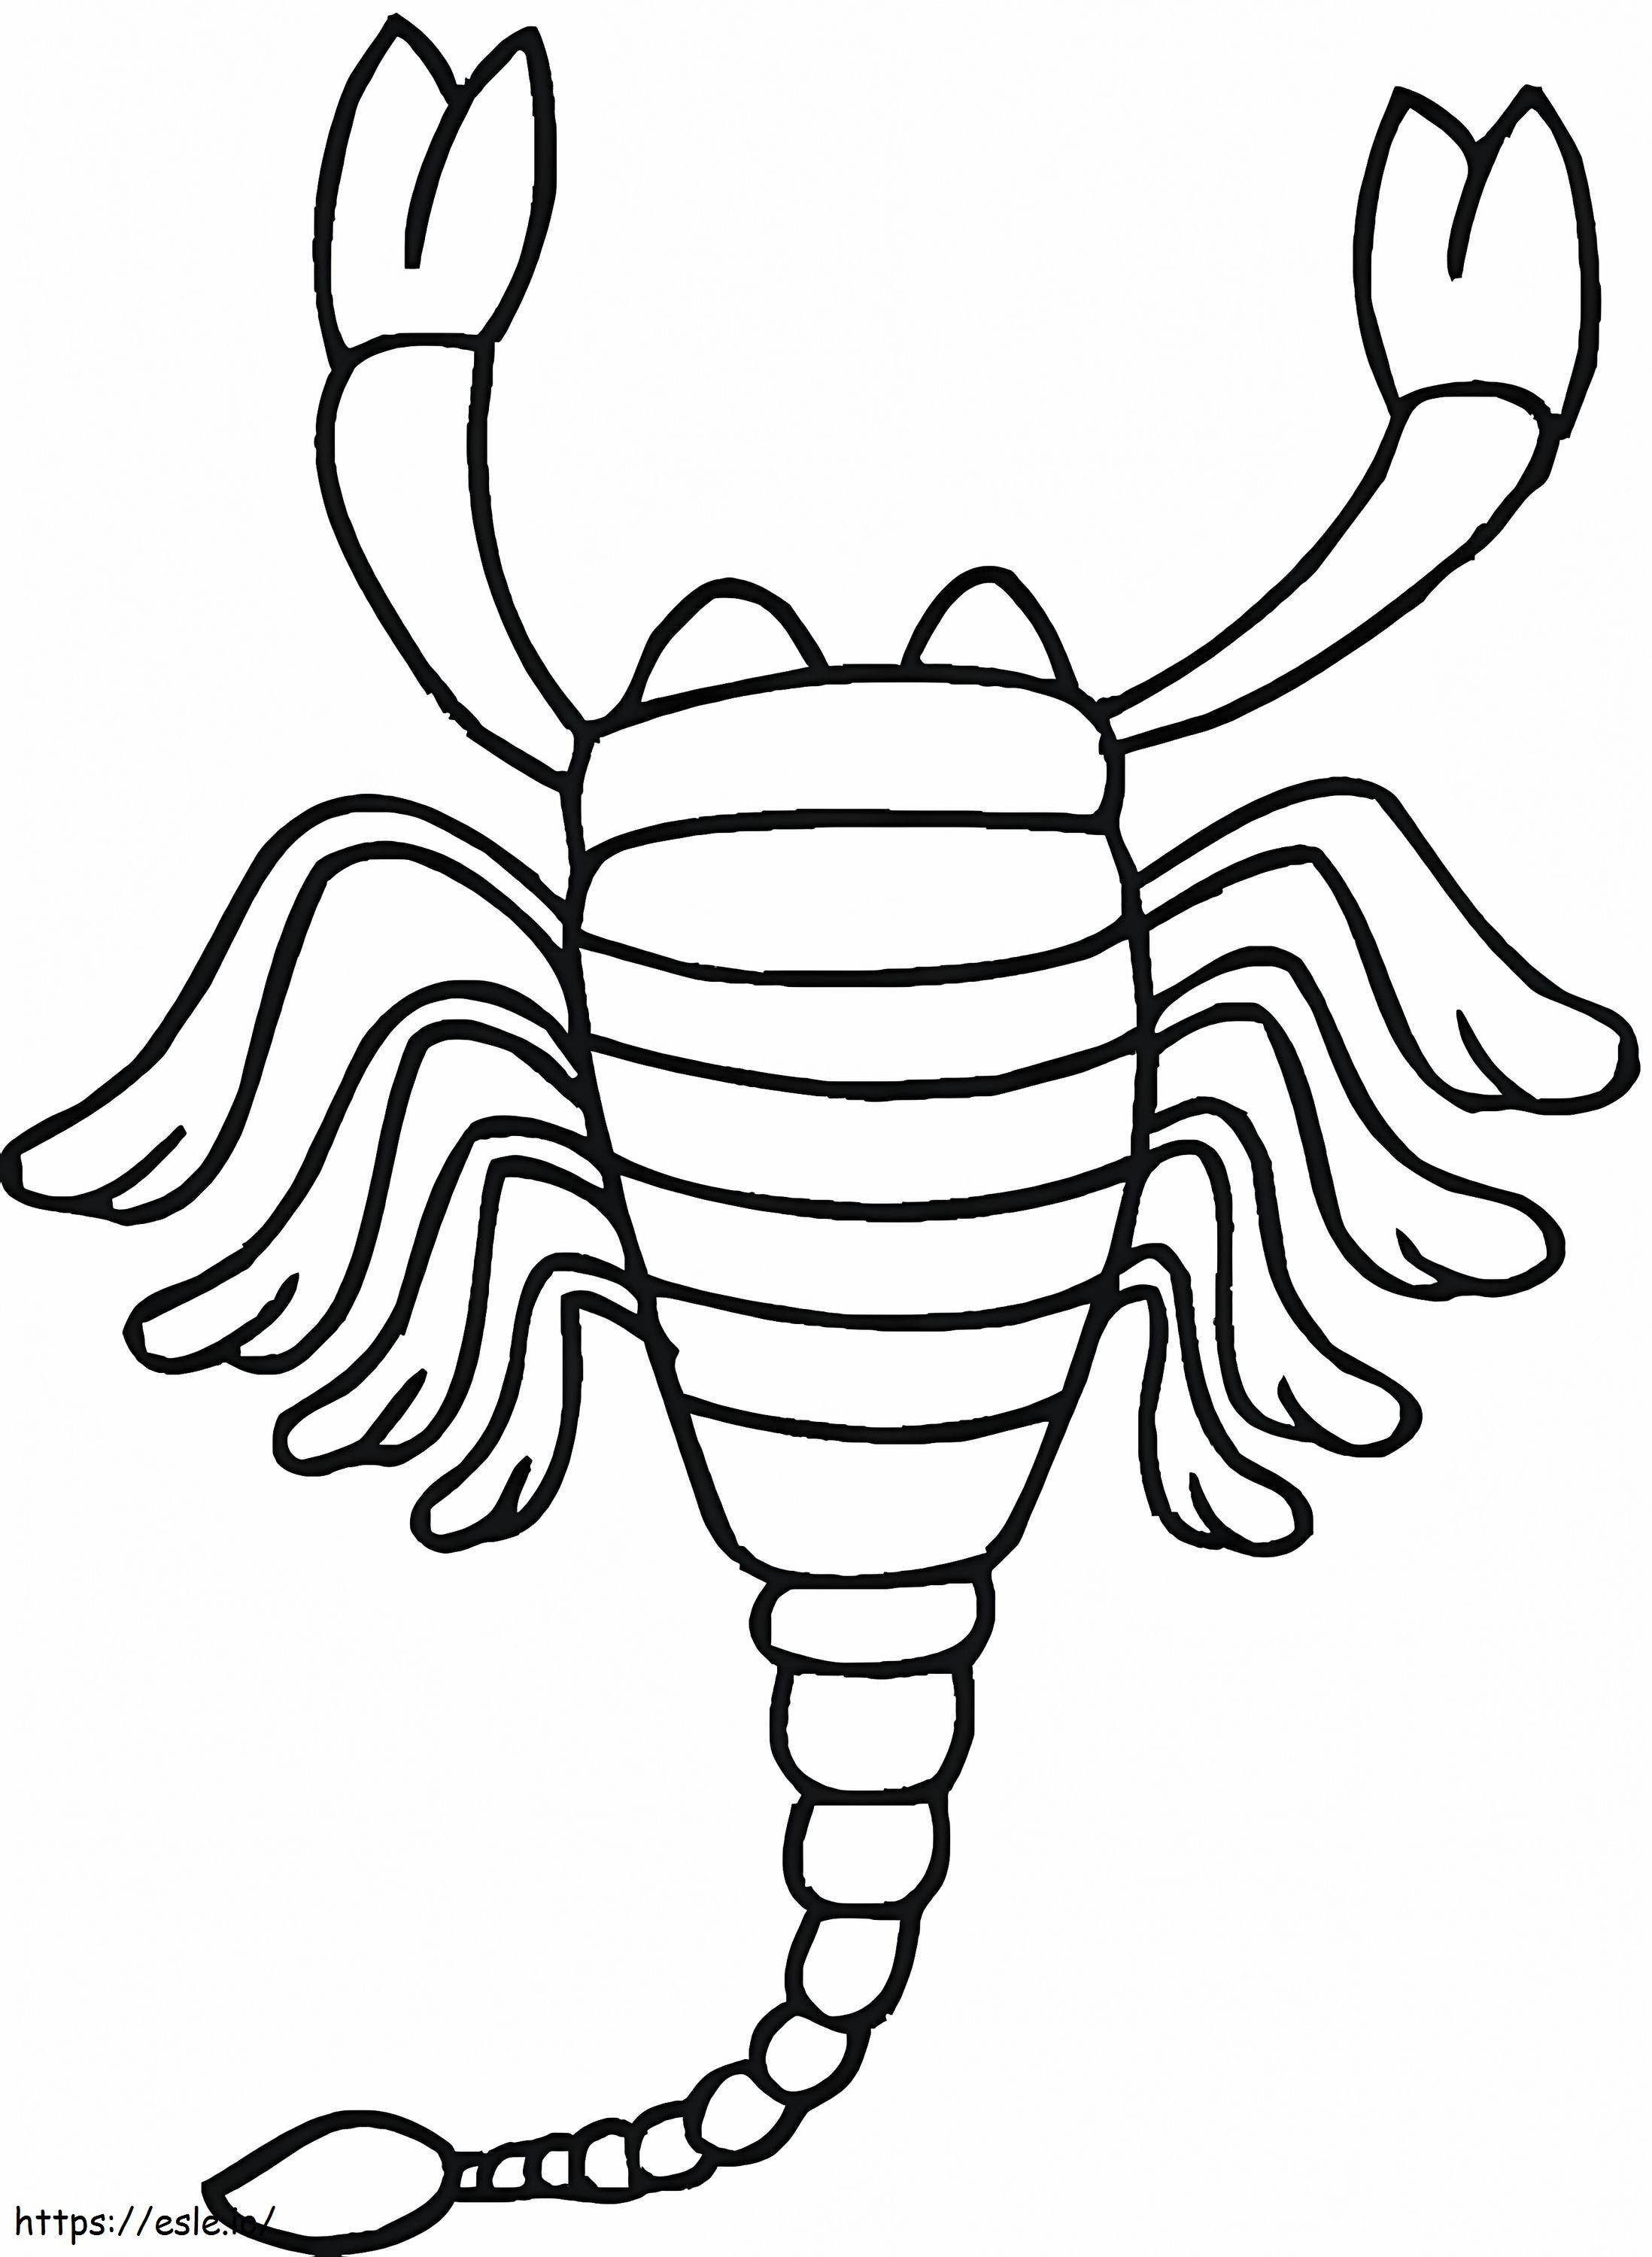 Scorpion Facile coloring page